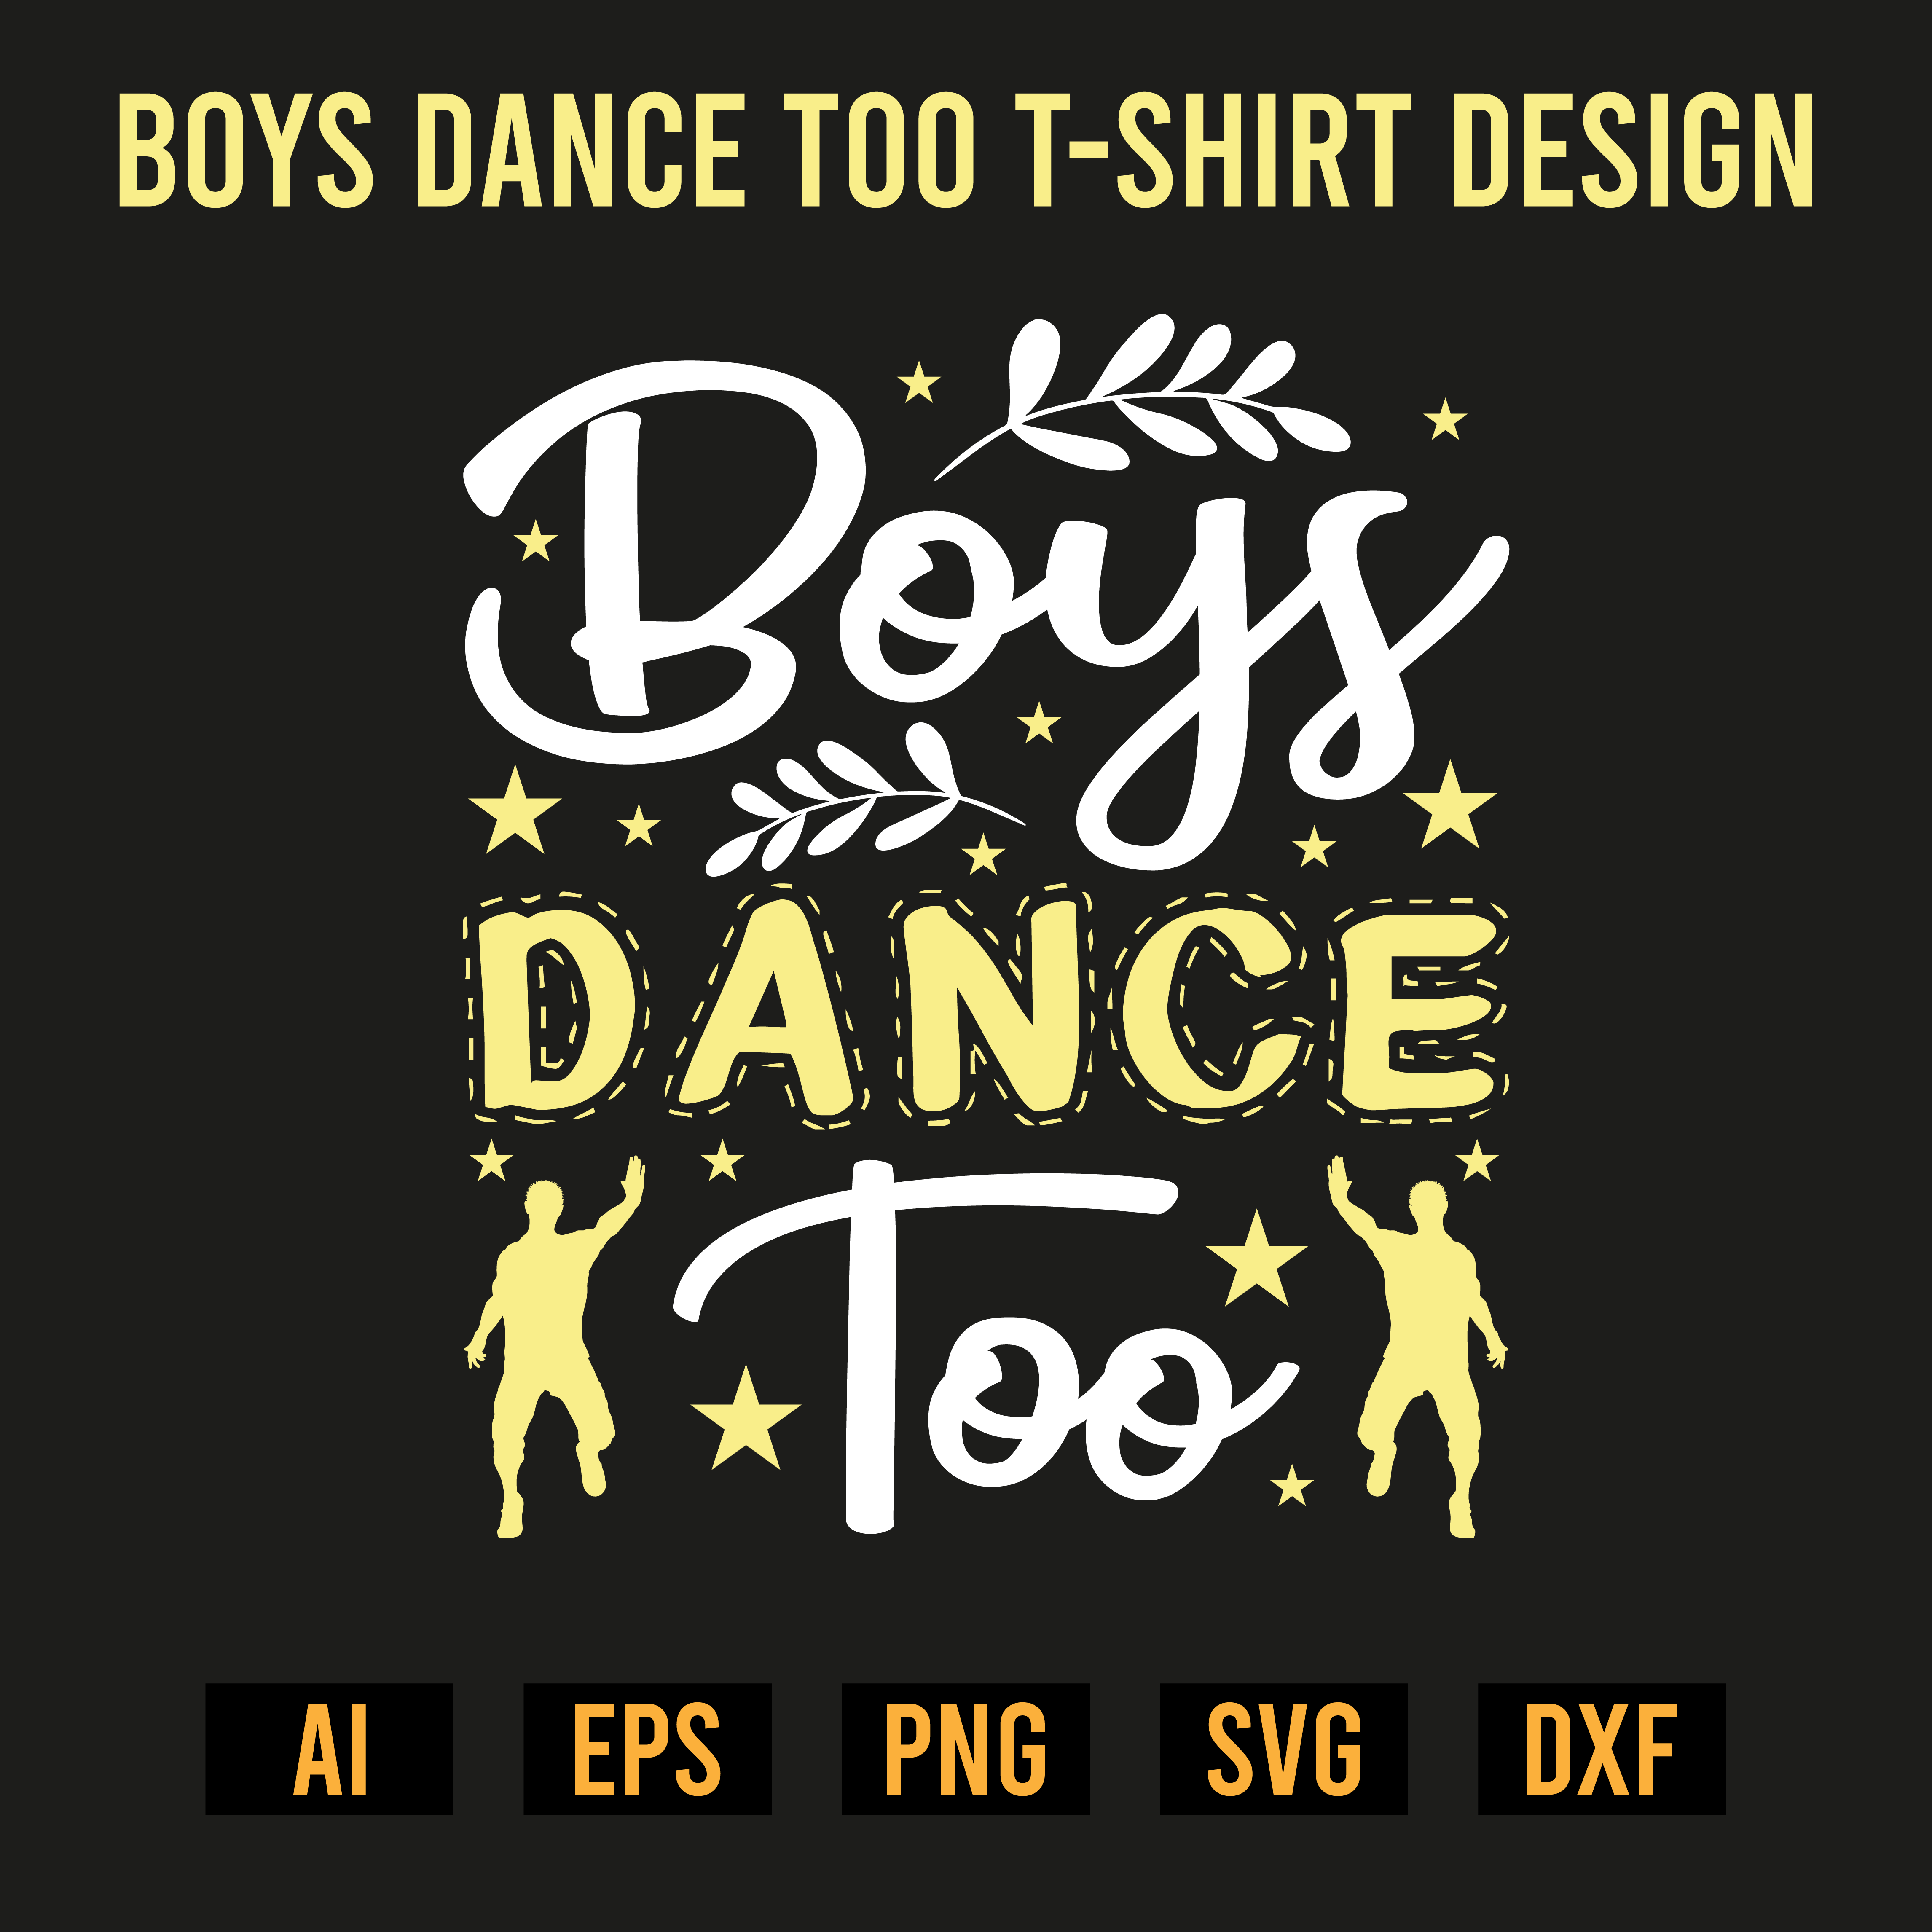 Boys Dance Too T-Shirt Design preview image.